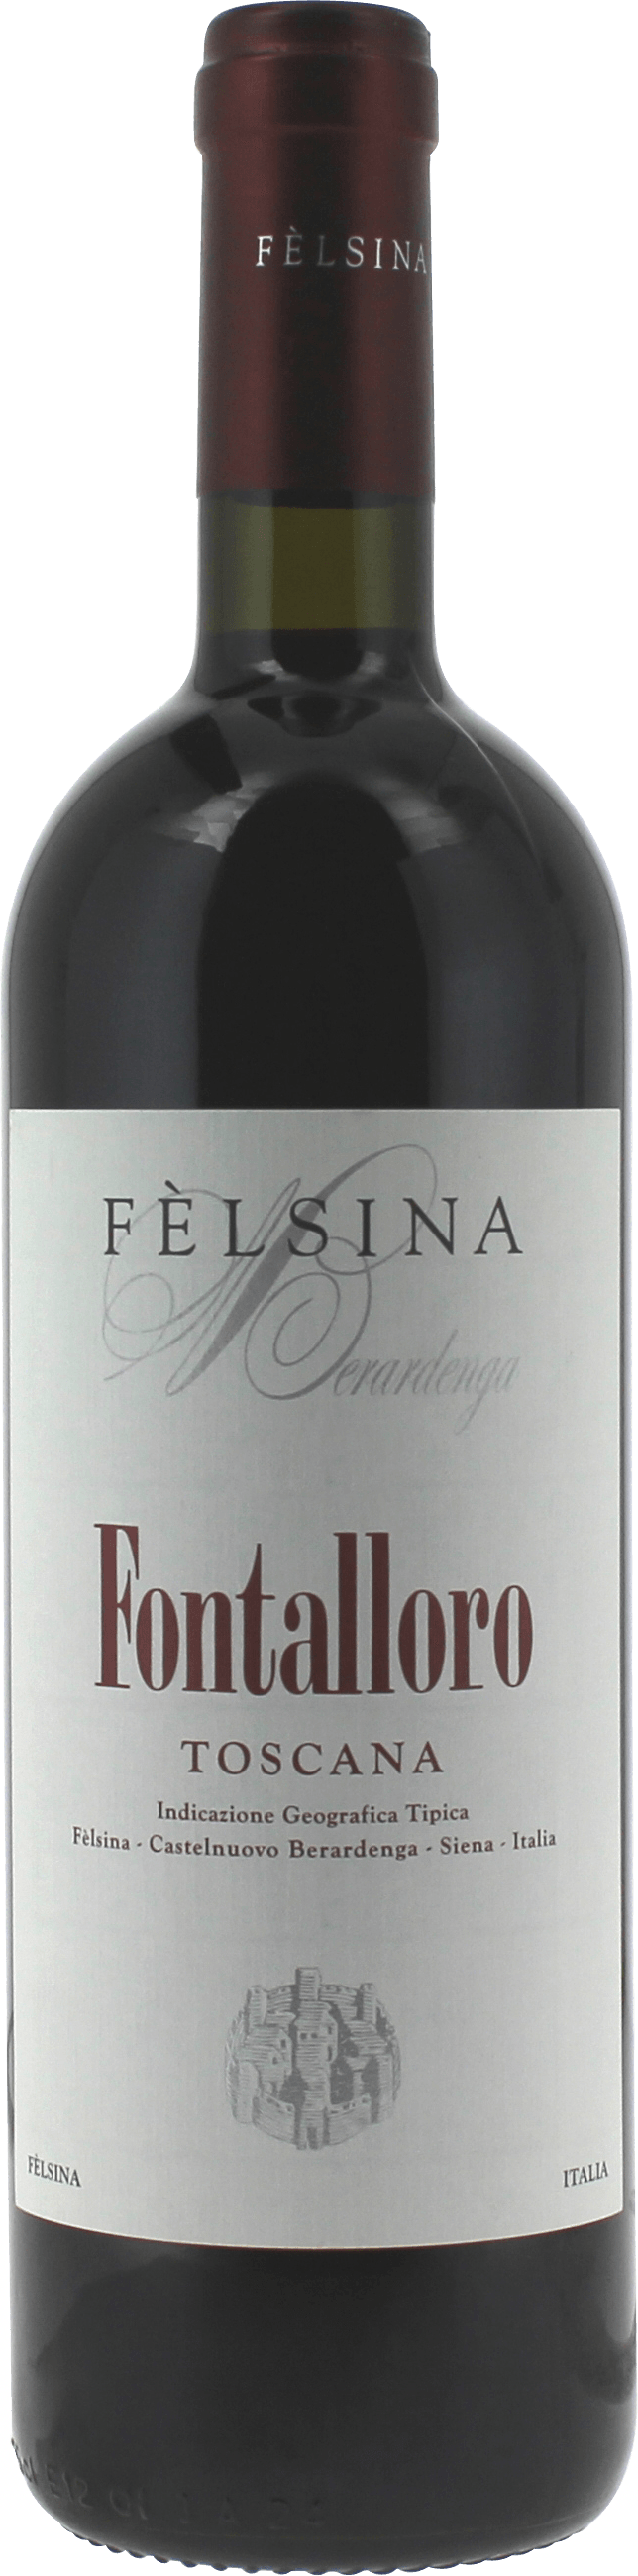 Felsina - fontalloro sangiovese  - toscane 2013  , Vin italien